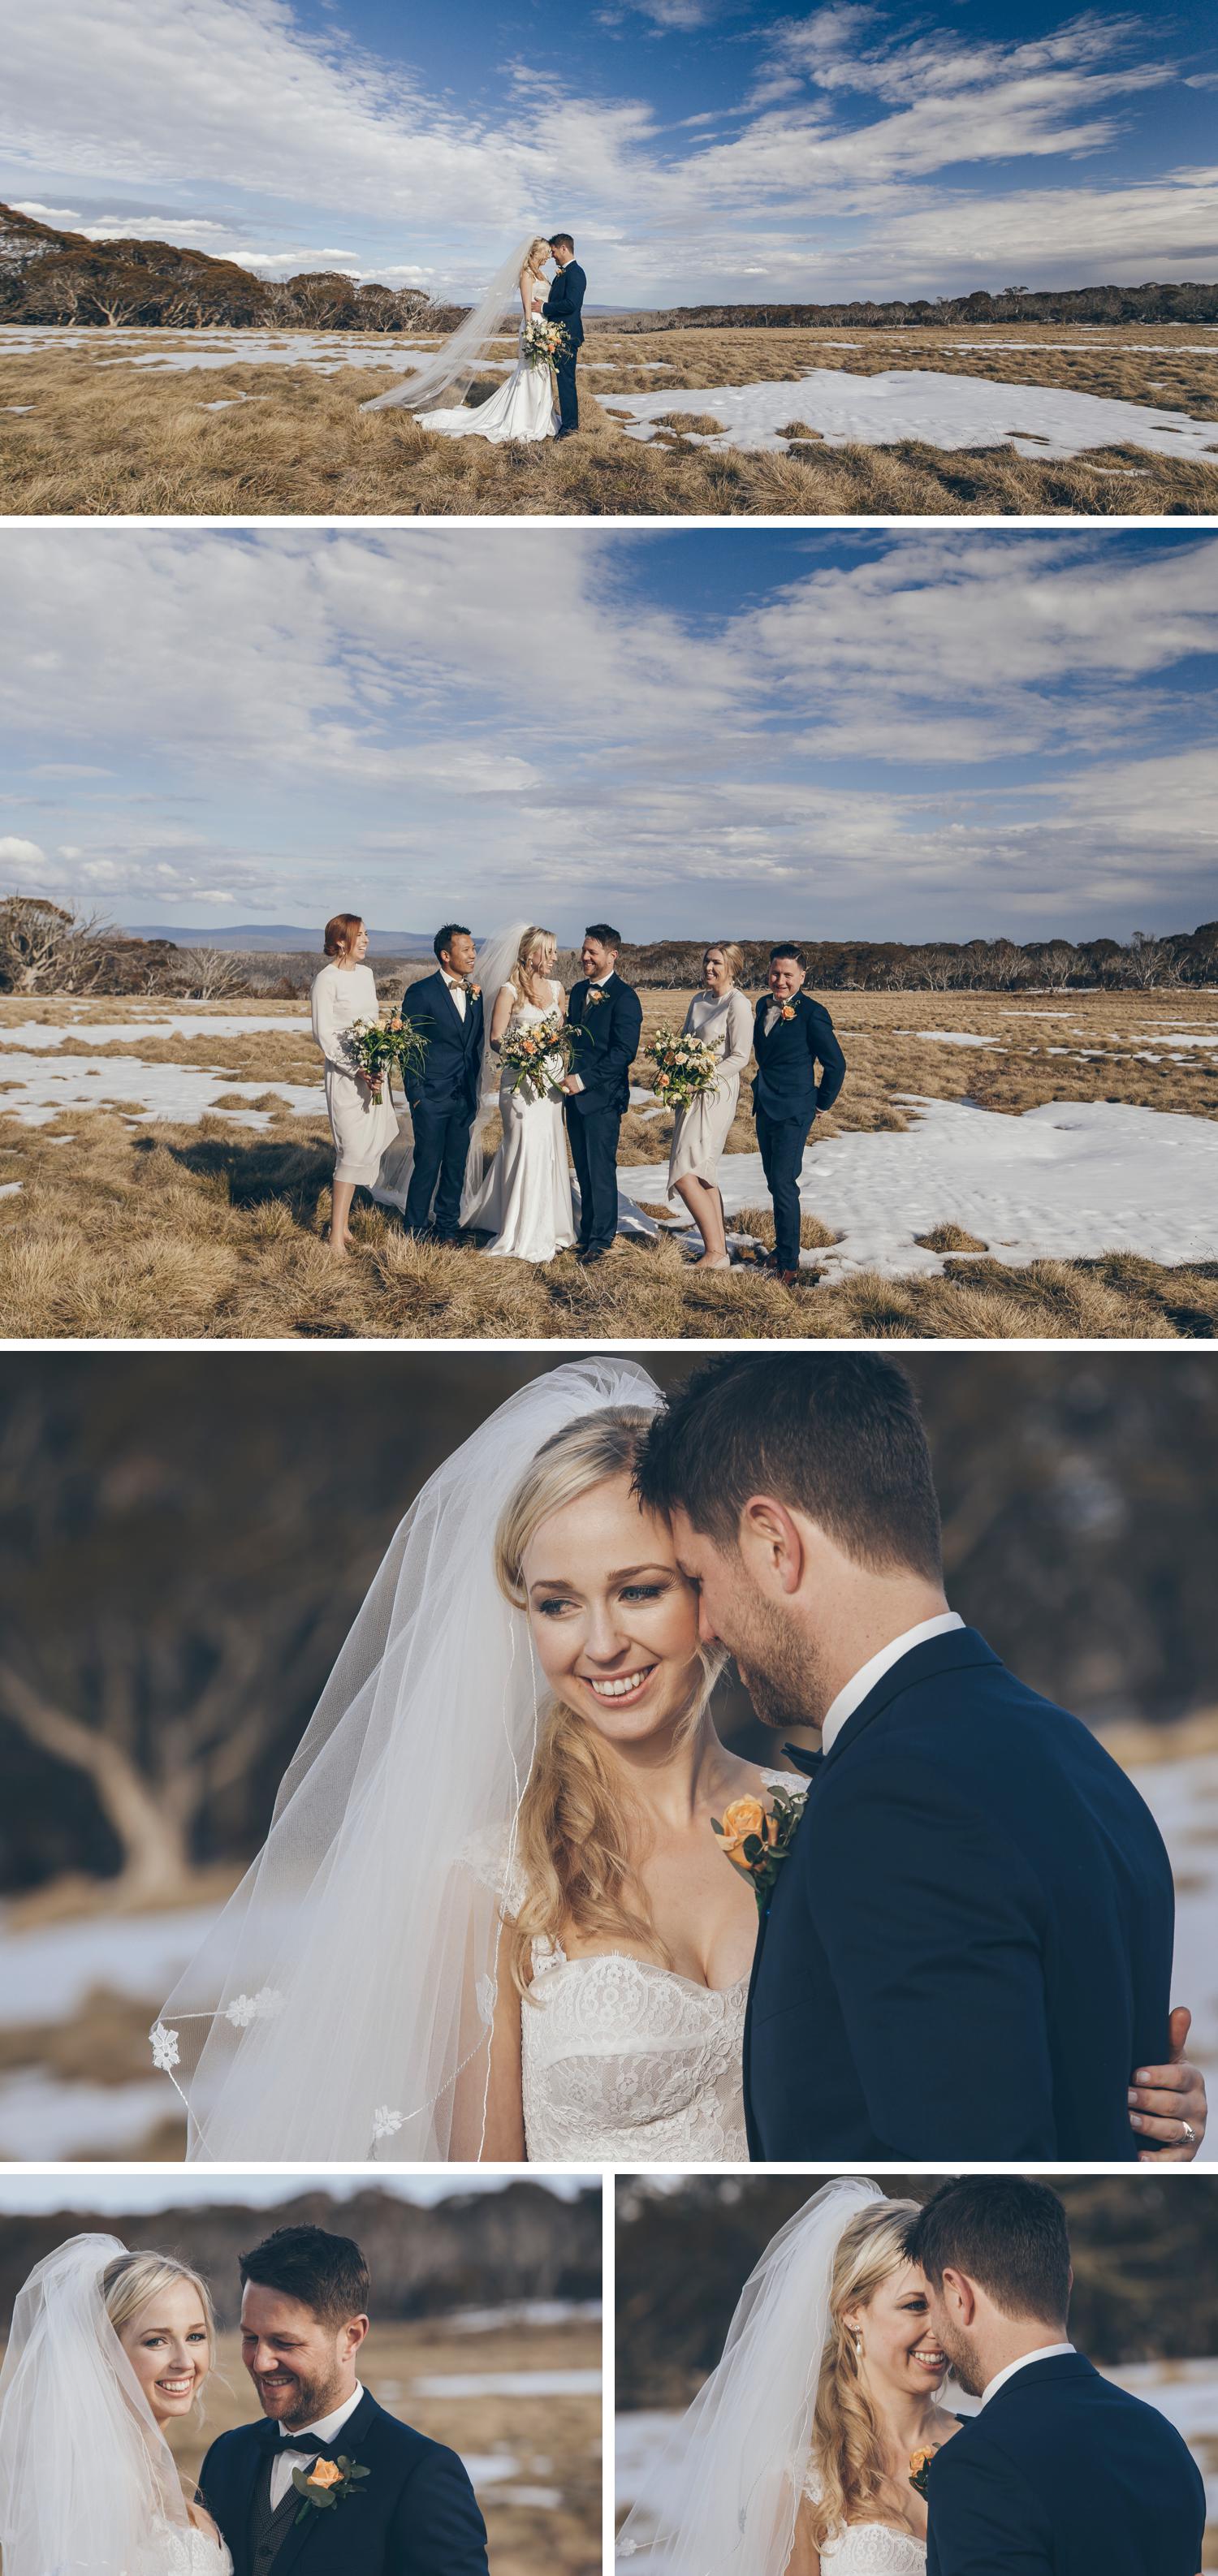 Rundells Alpine Lodge Wedding, Snow Wedding Photos, Beautiful Wedding Photos by Danae Studios, Bride and Groom Embracing